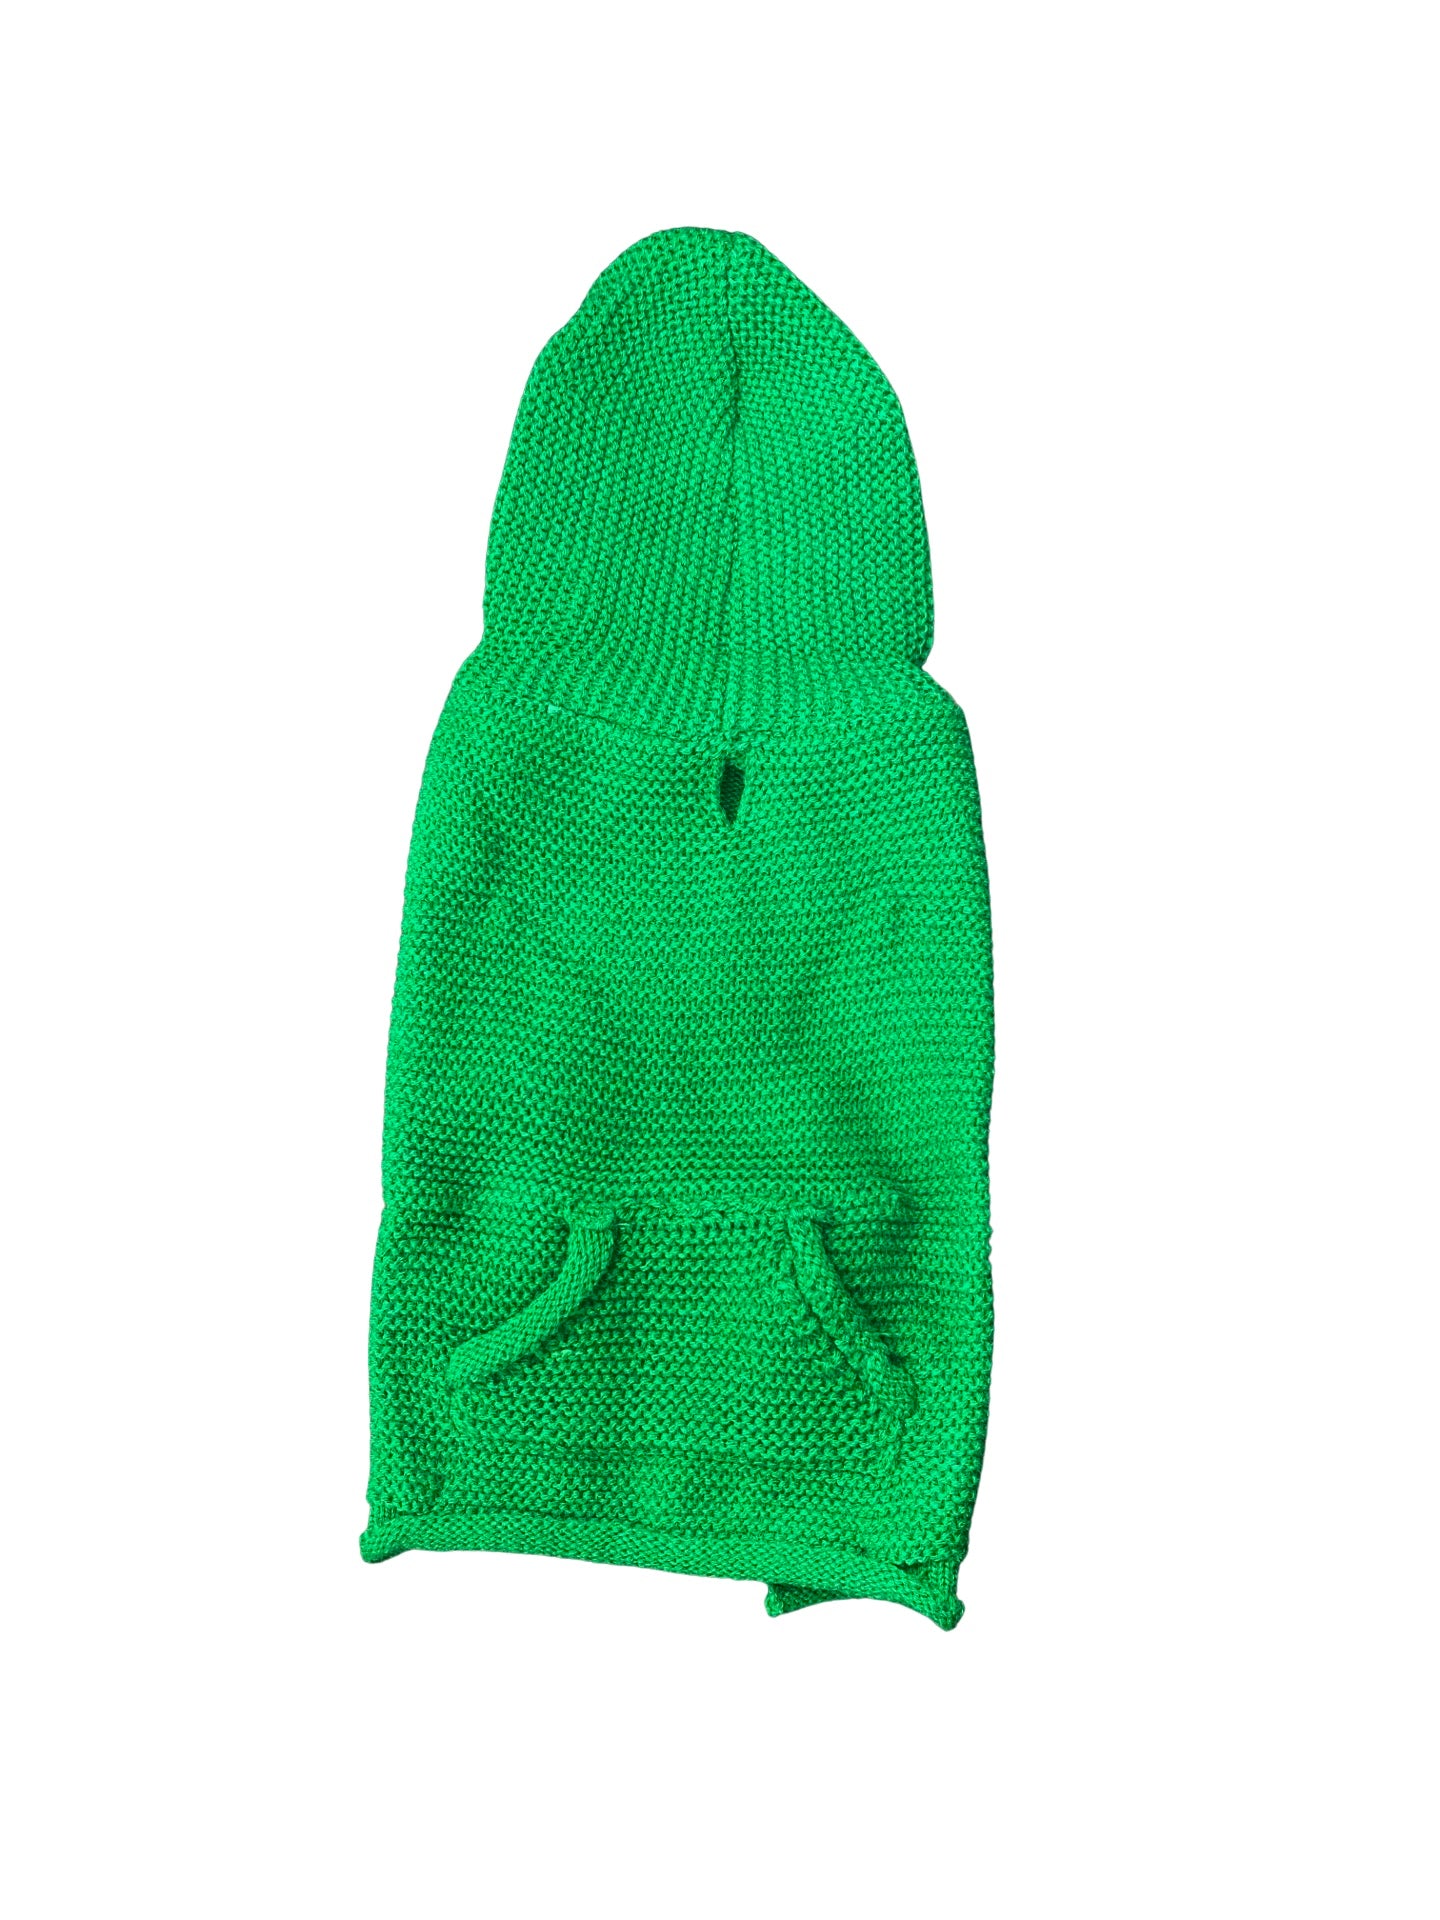 Knit Pet Sweater- Green